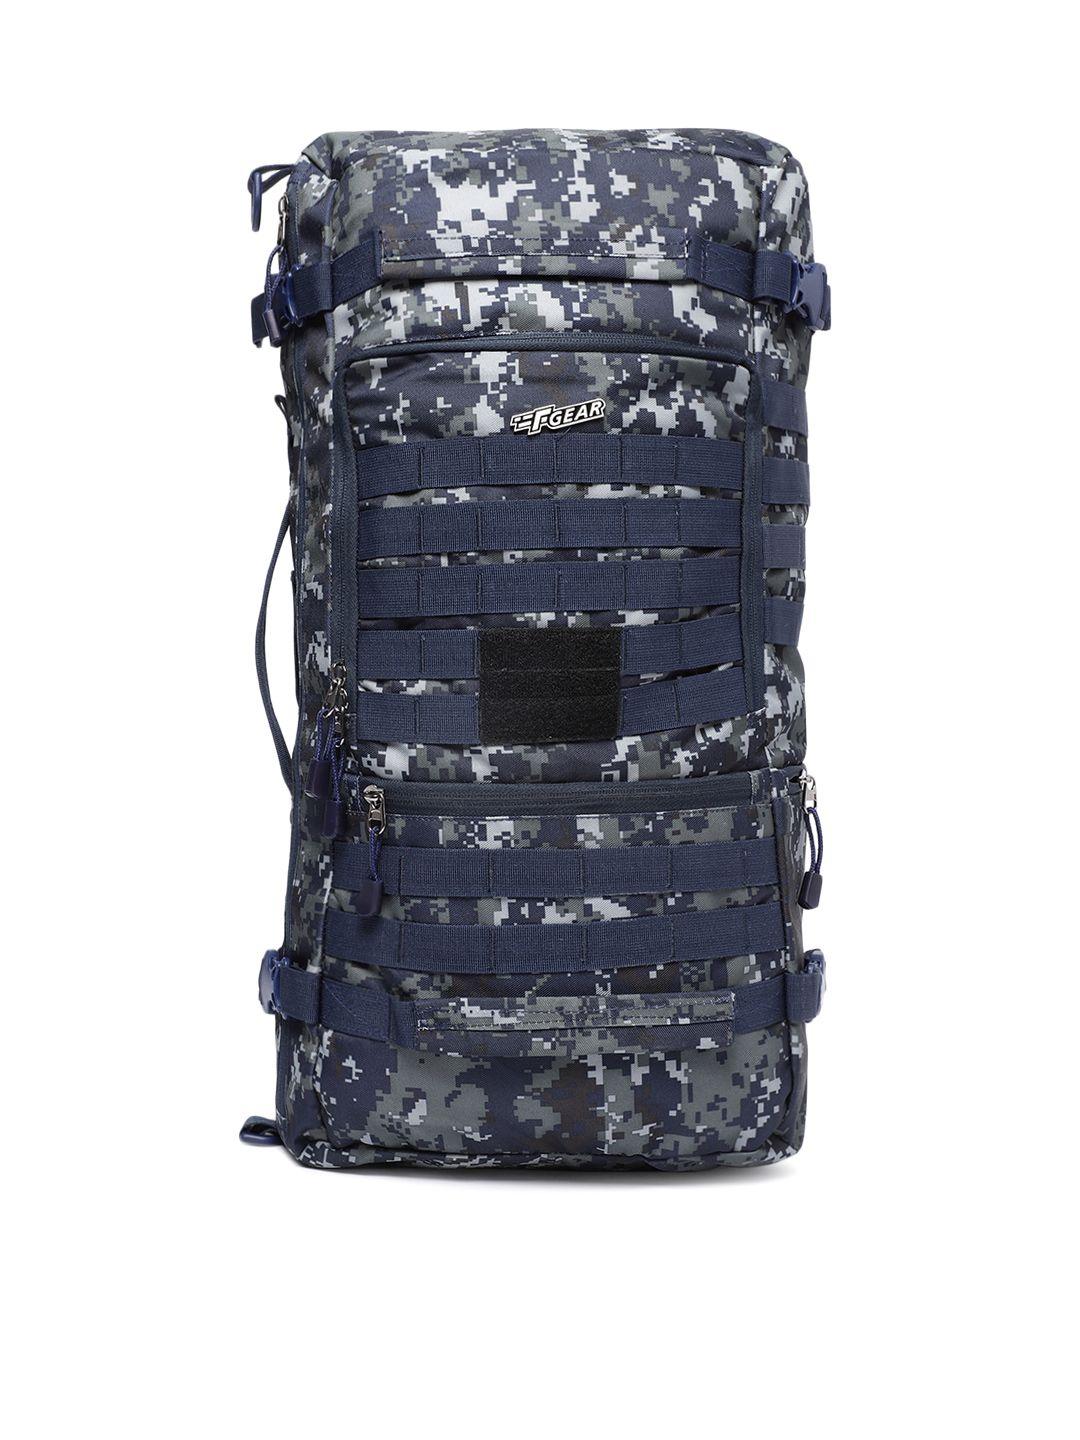 f gear unisex blue & green printed military garrison marpat laptop cum backpack